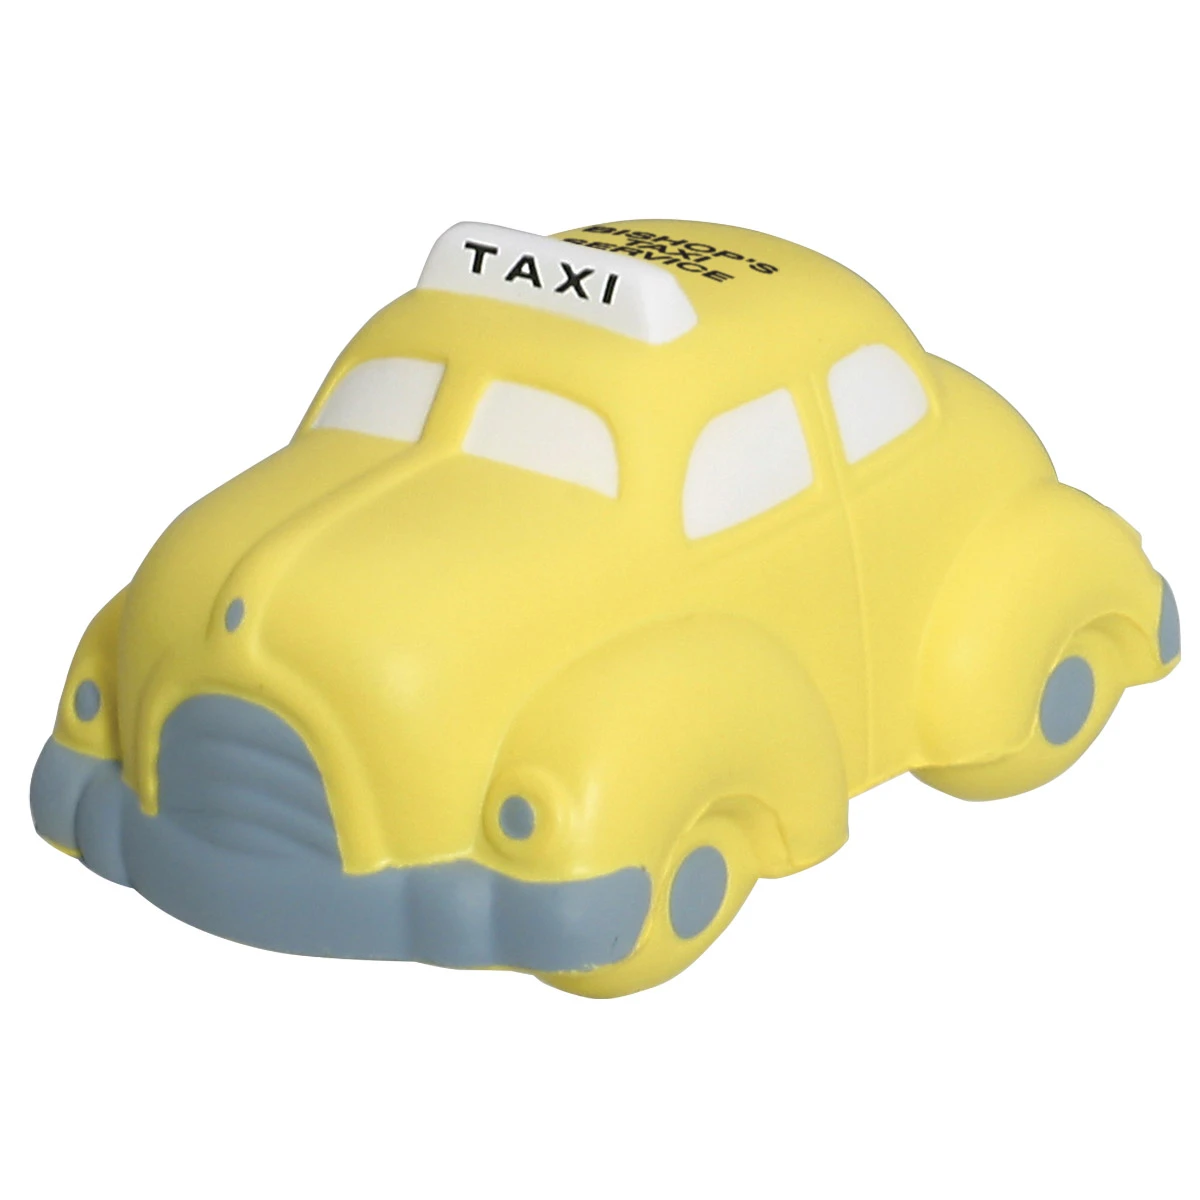 Taxi Stress Ball